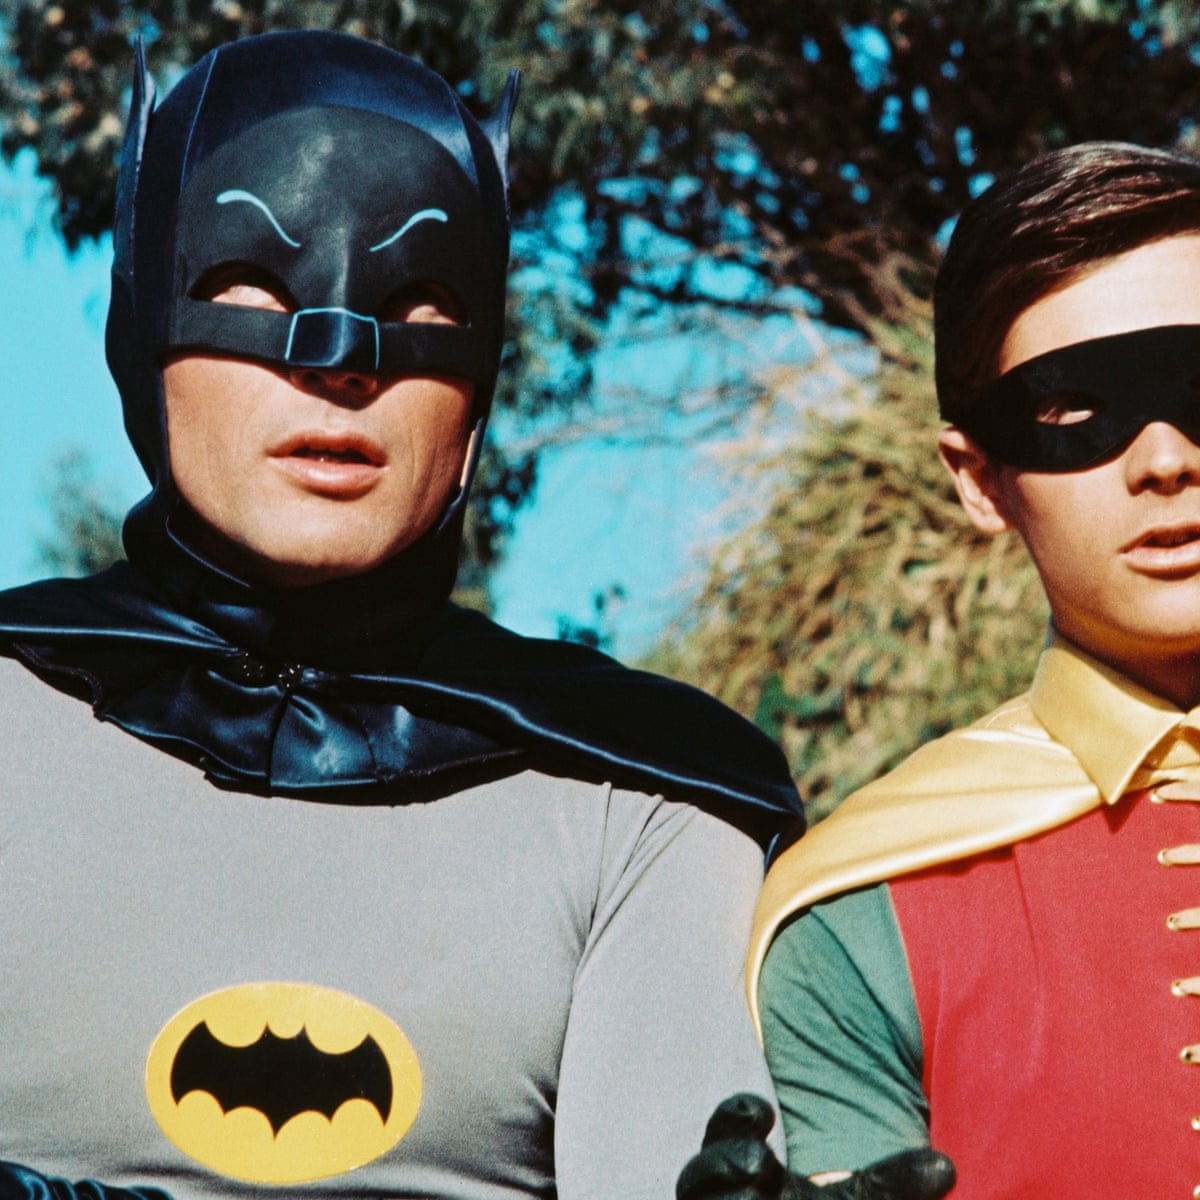 Adam West's campy Batman was a joy. Modern superheroes